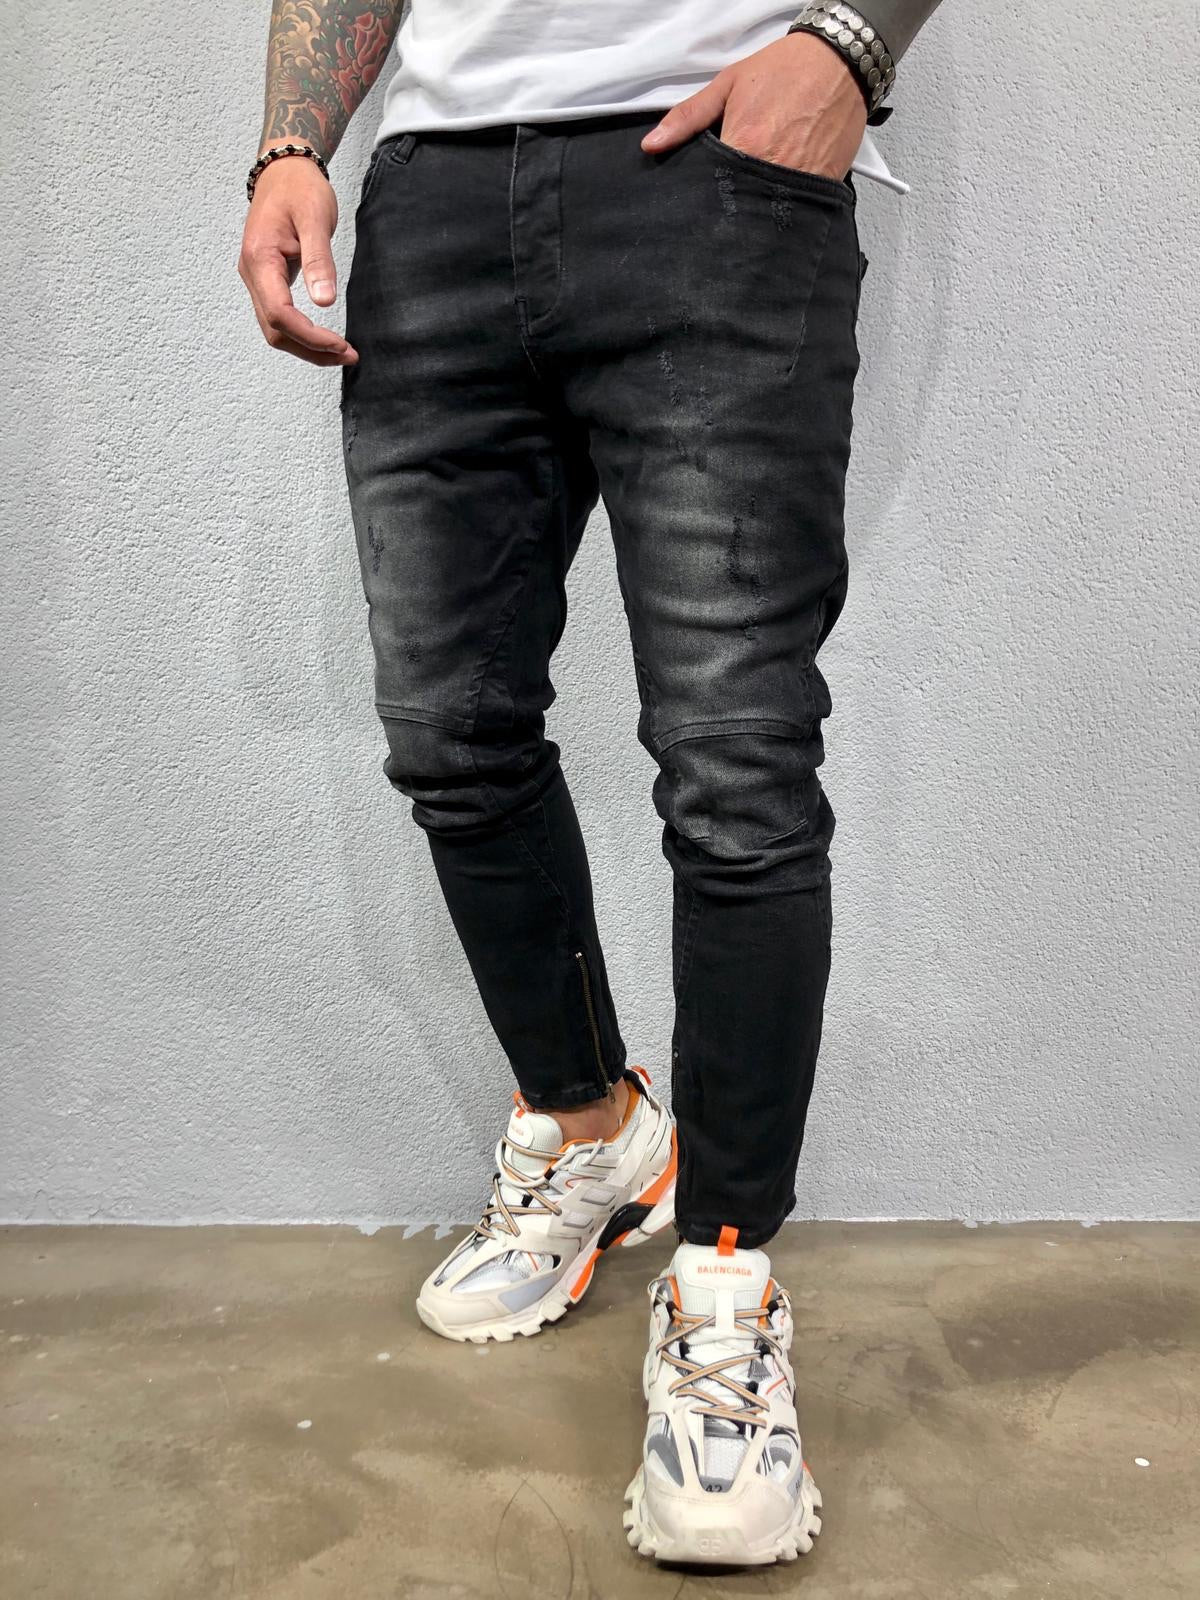 romersk Umeki tage medicin Black Ankle Zip Jeans Slim Fit Jeans BL548 Streetwear Mens Jeans |  Sneakerjeans